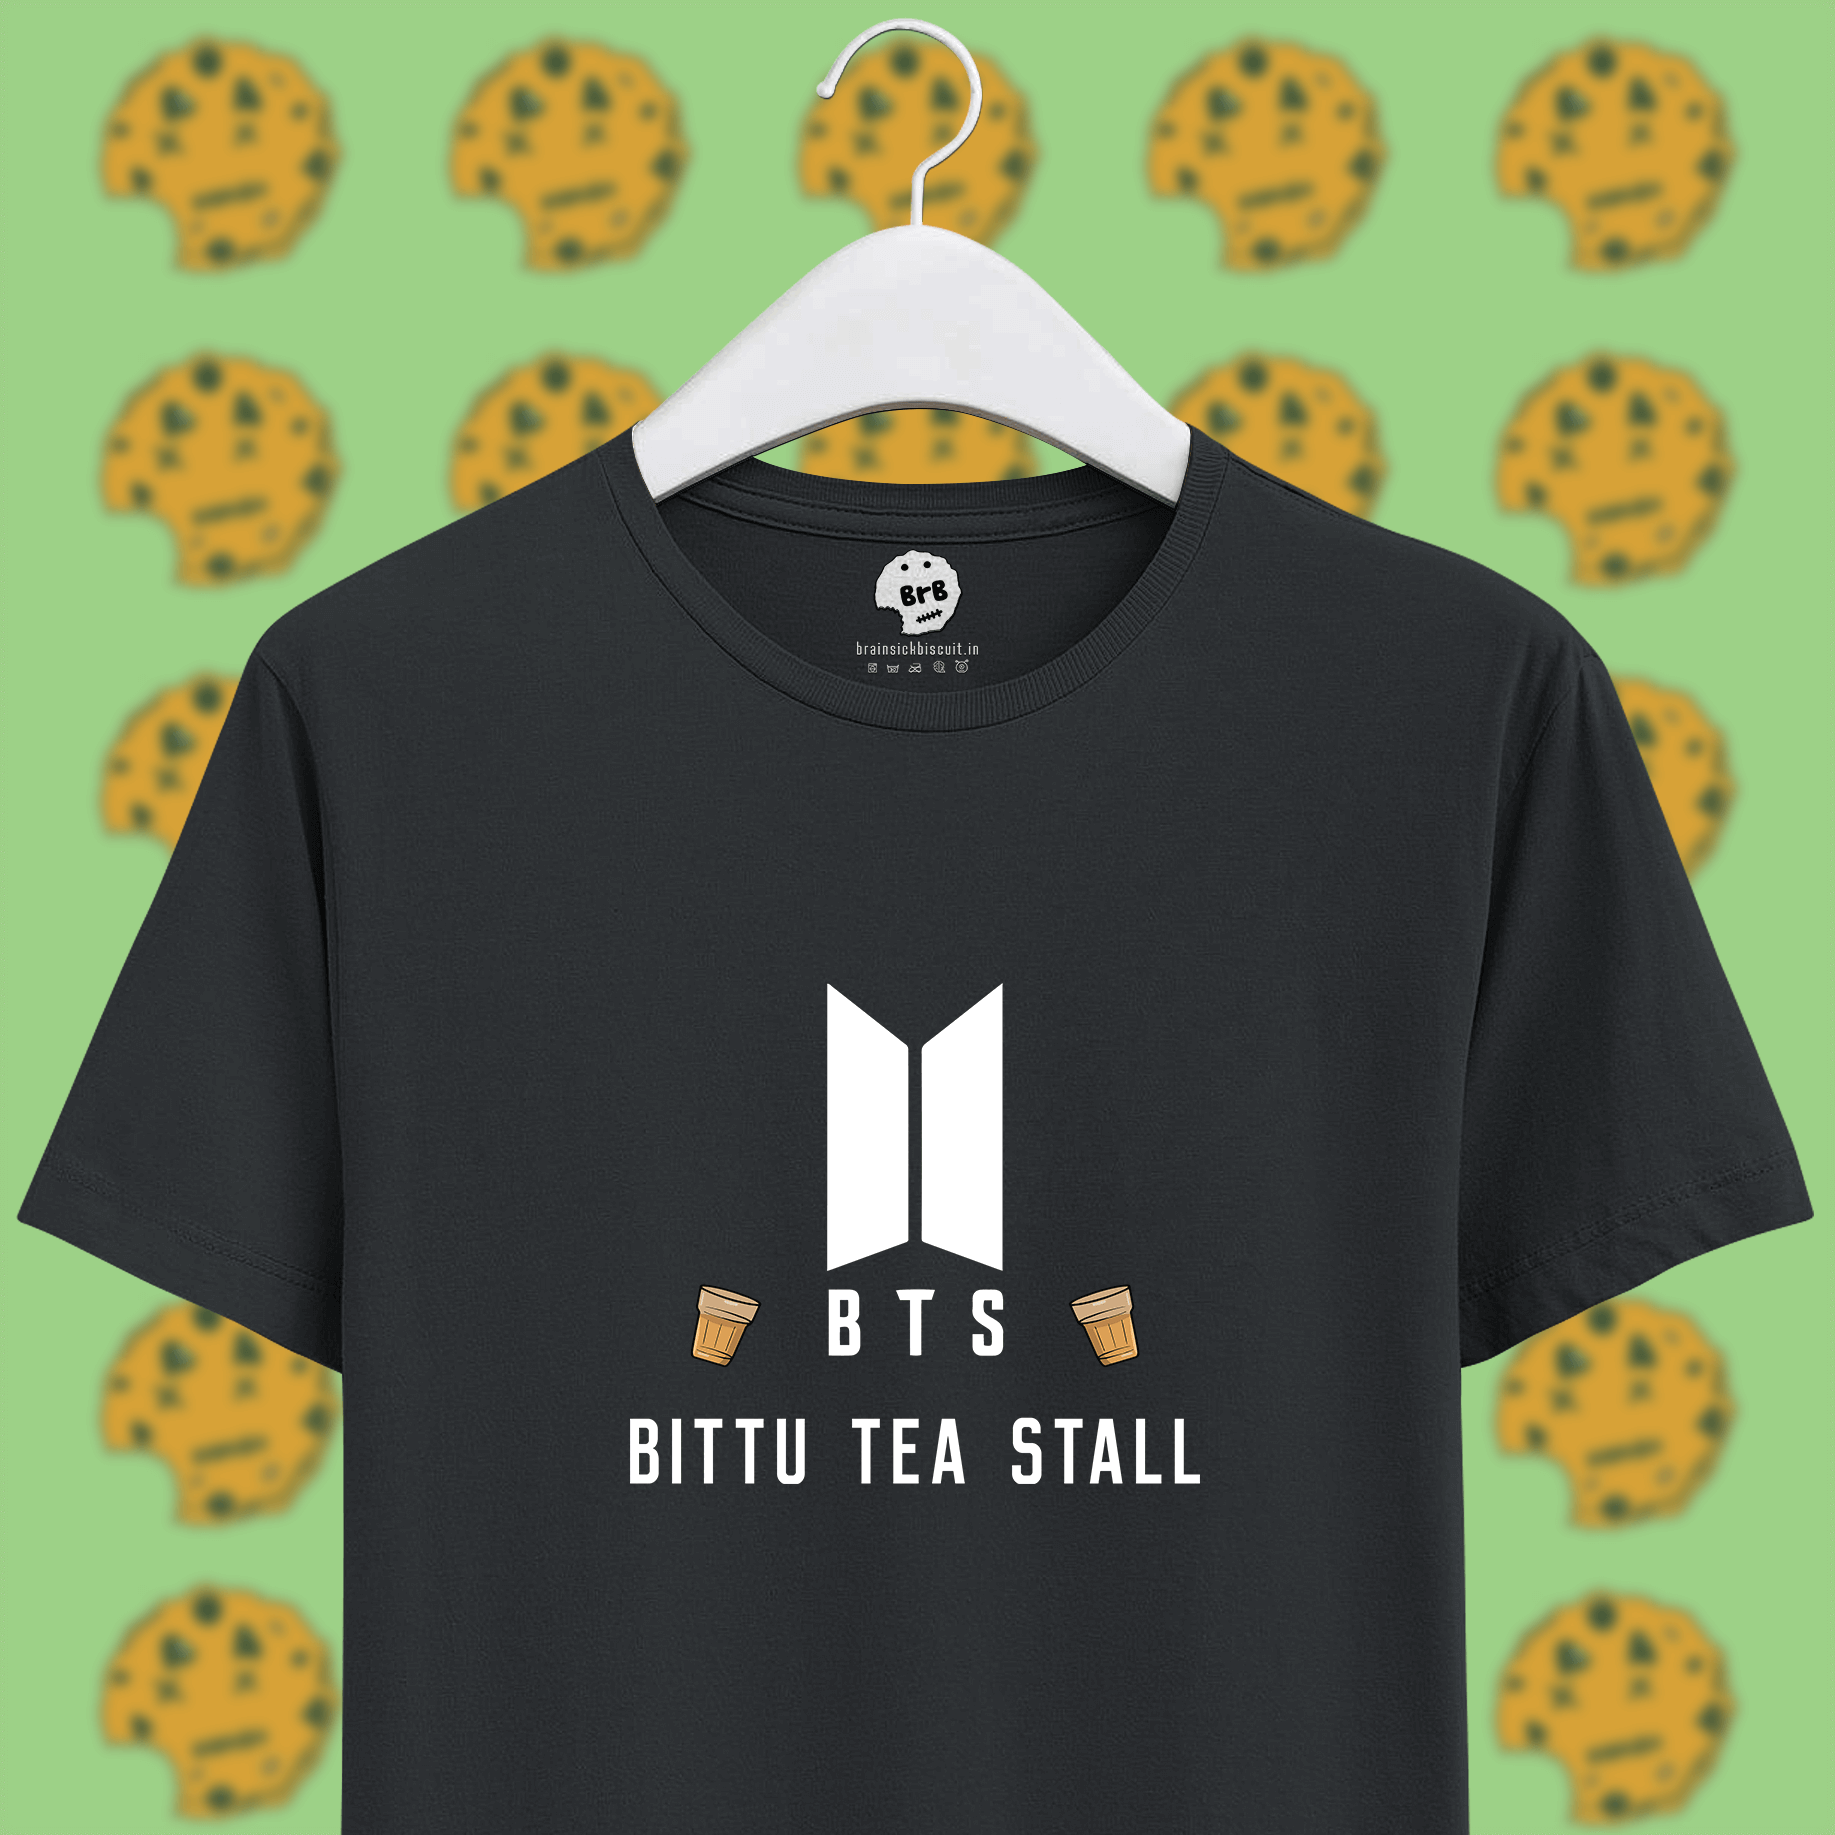 BTS logo with bittu tea stall joke on unisex steel grey half sleeves cotton t-shirt.